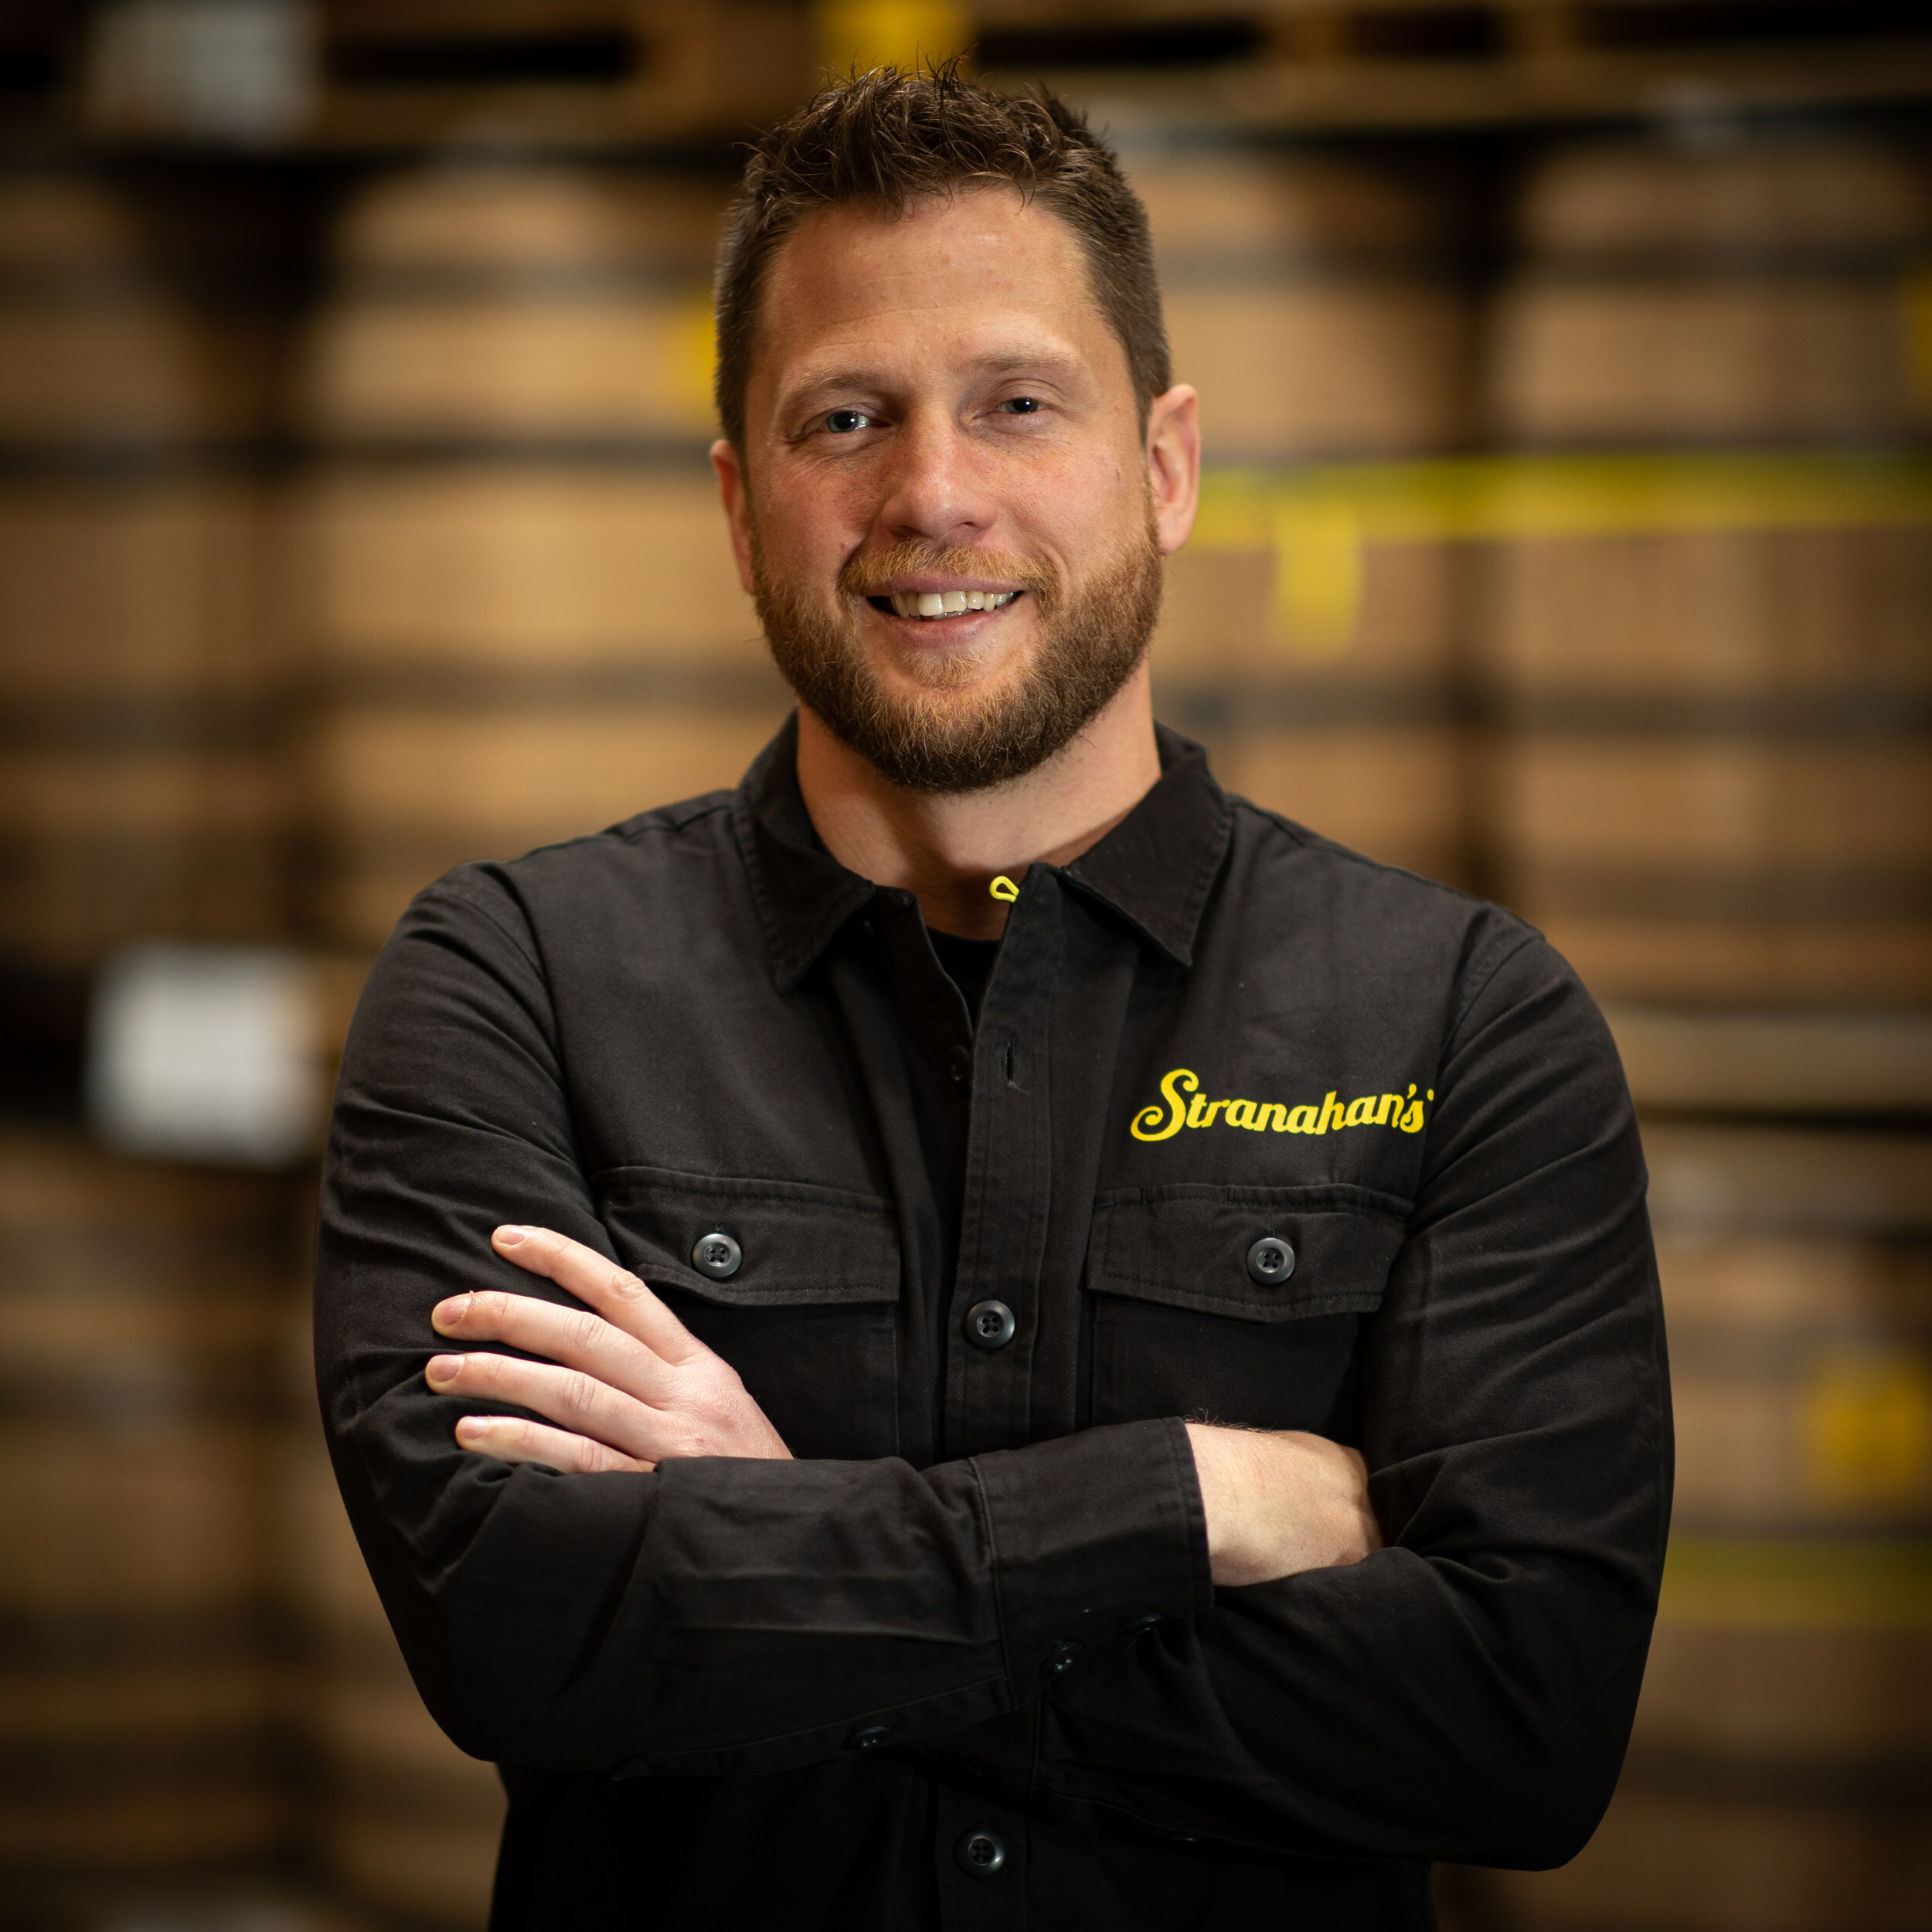 Stranahan’s Colorado Whiskey Appoints New Head Blender, Justin Aden